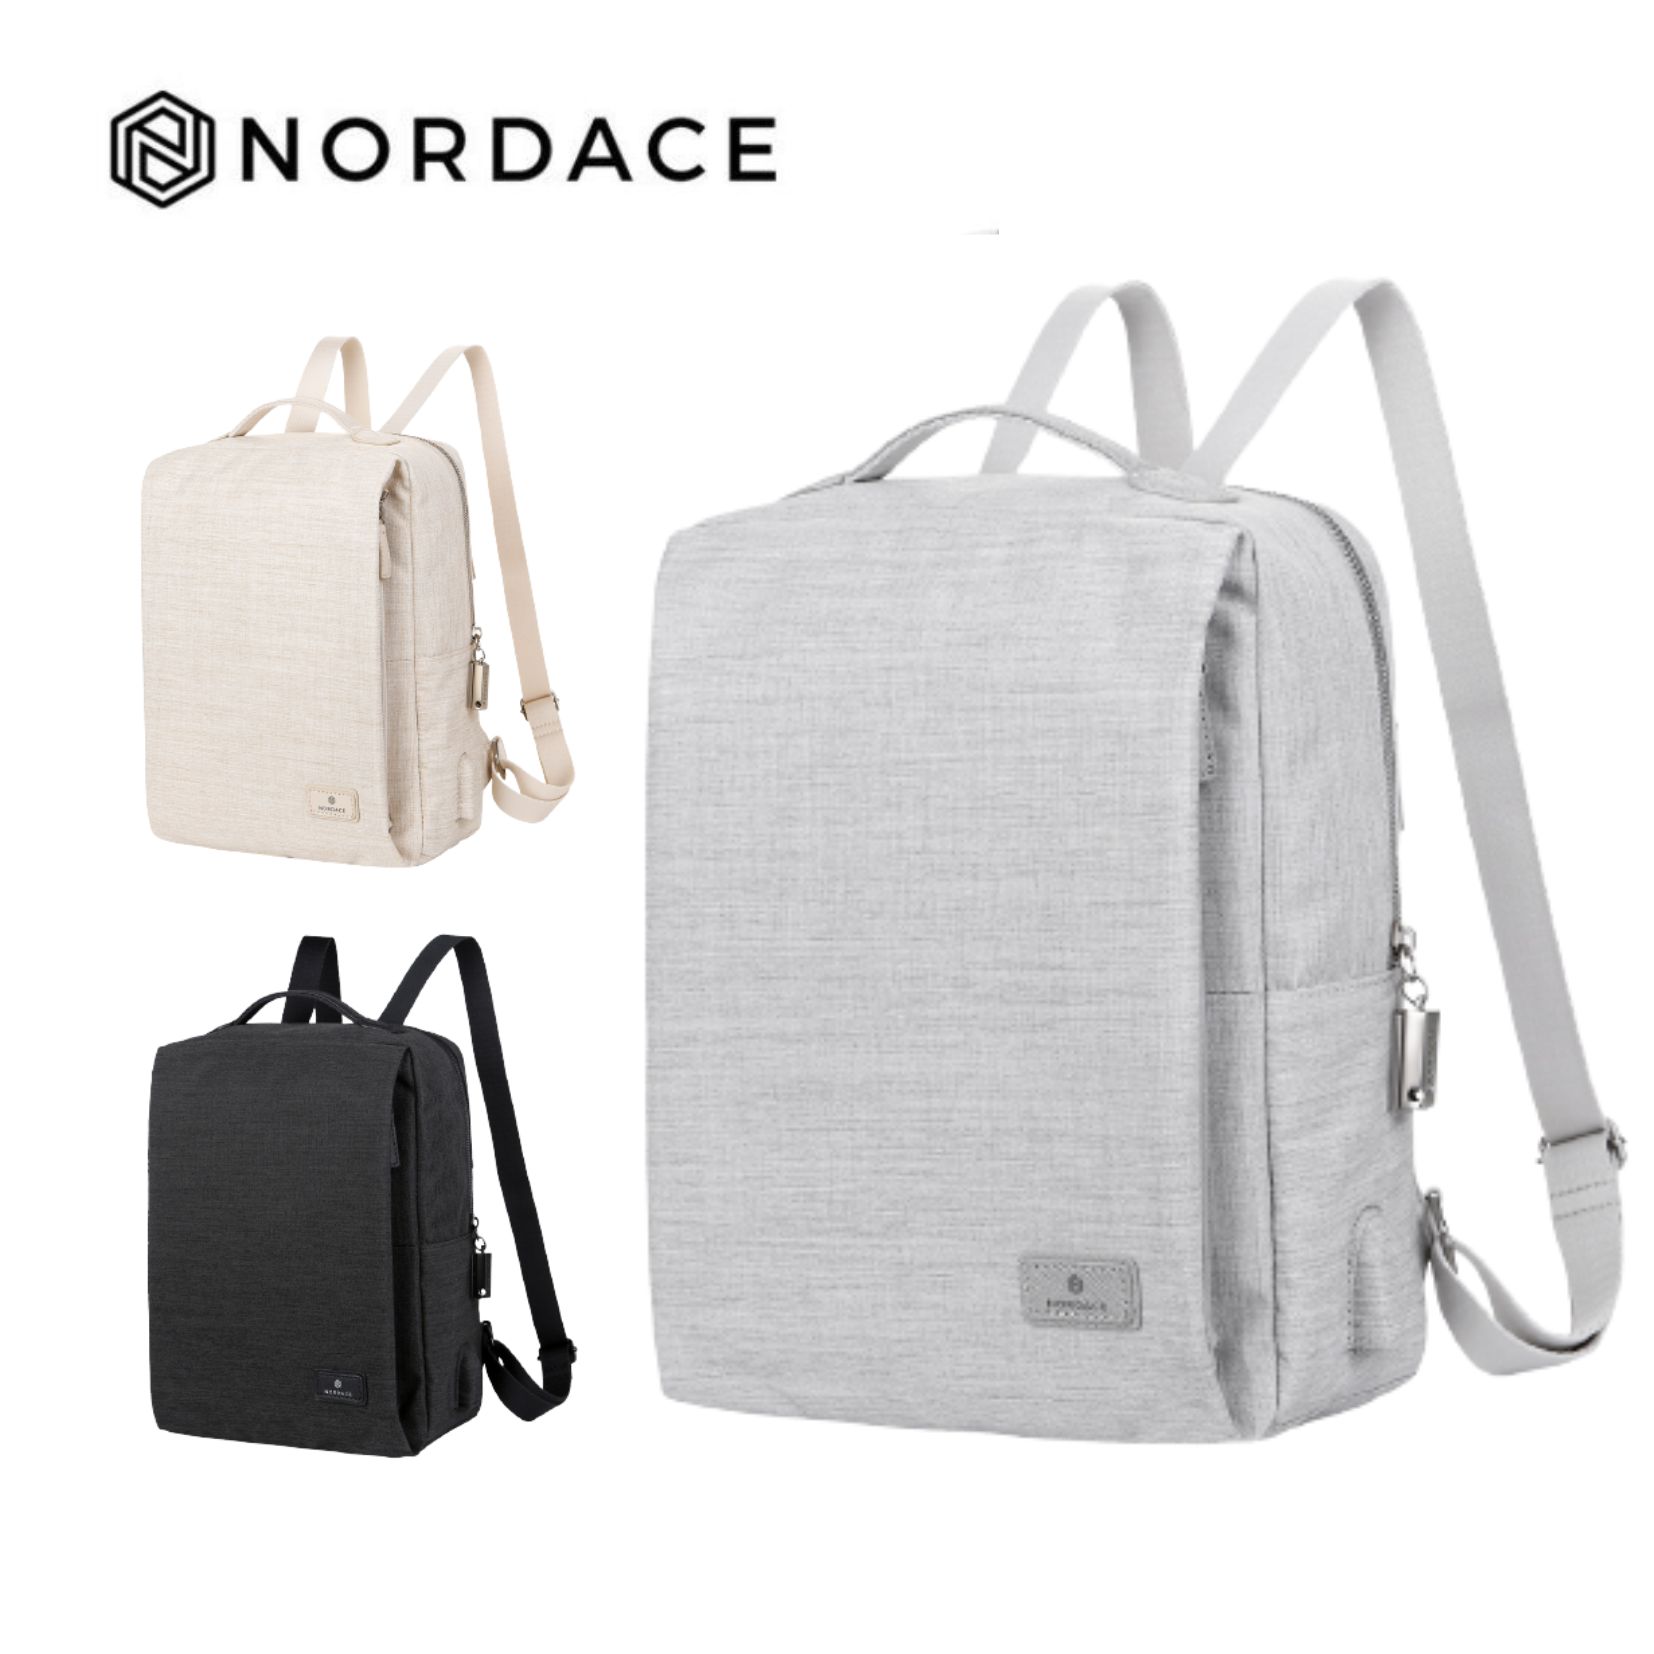 Nordace Siena II 迷你背包 充電雙肩包 電腦包 旅行包 後背包 輕便-3色可選 灰色